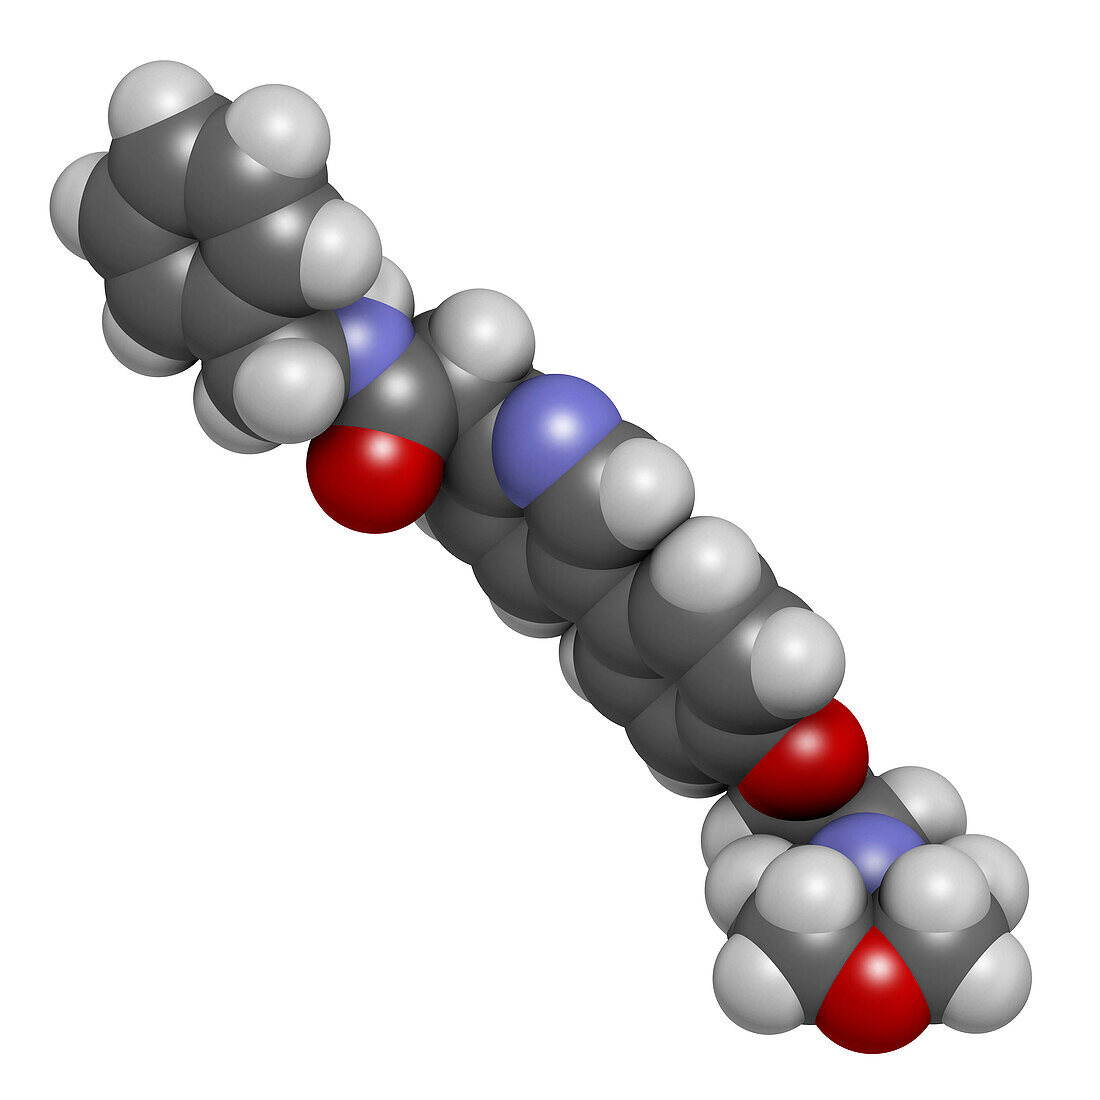 Tirbanibulin actinic keratosis drug molecule, illustration